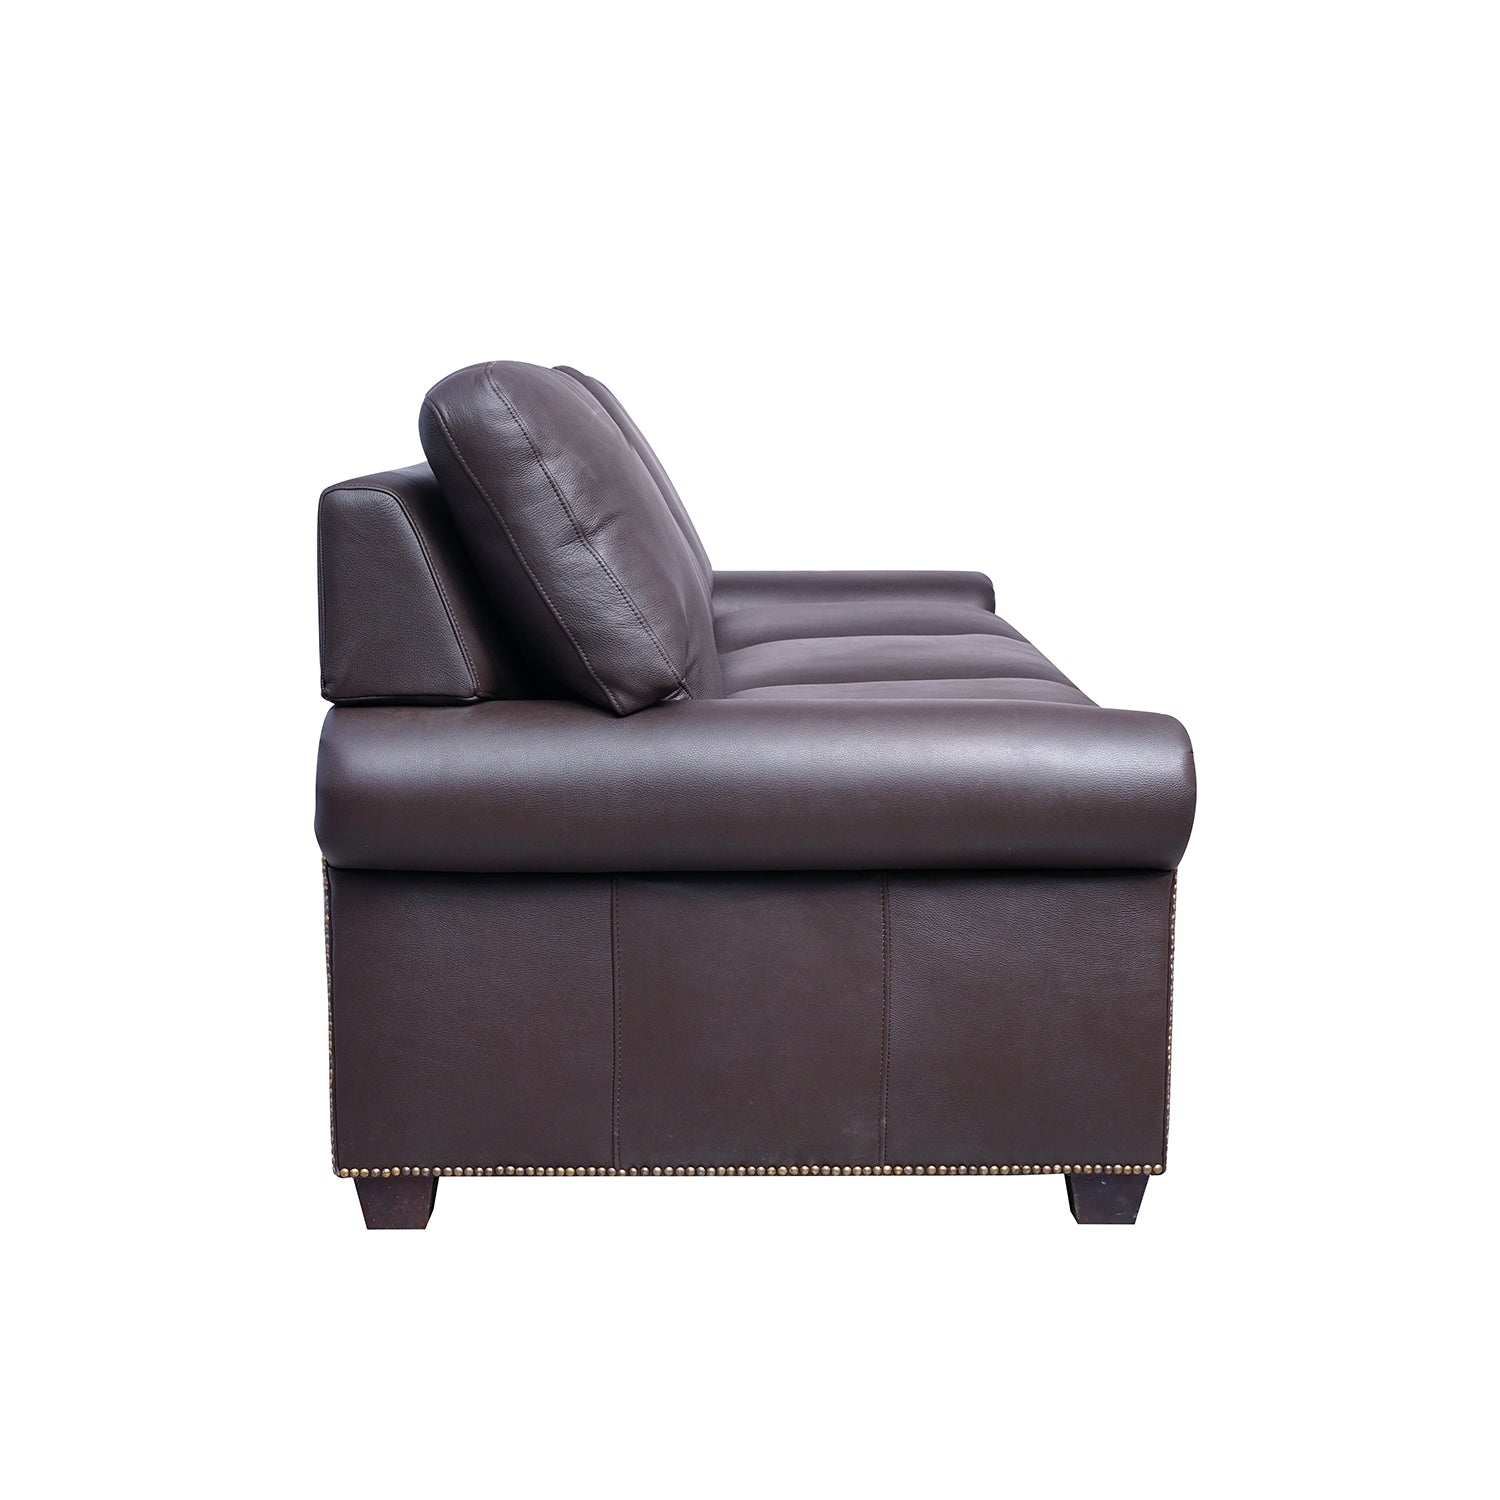 Dumond Lear Leather Sofa Umber Side